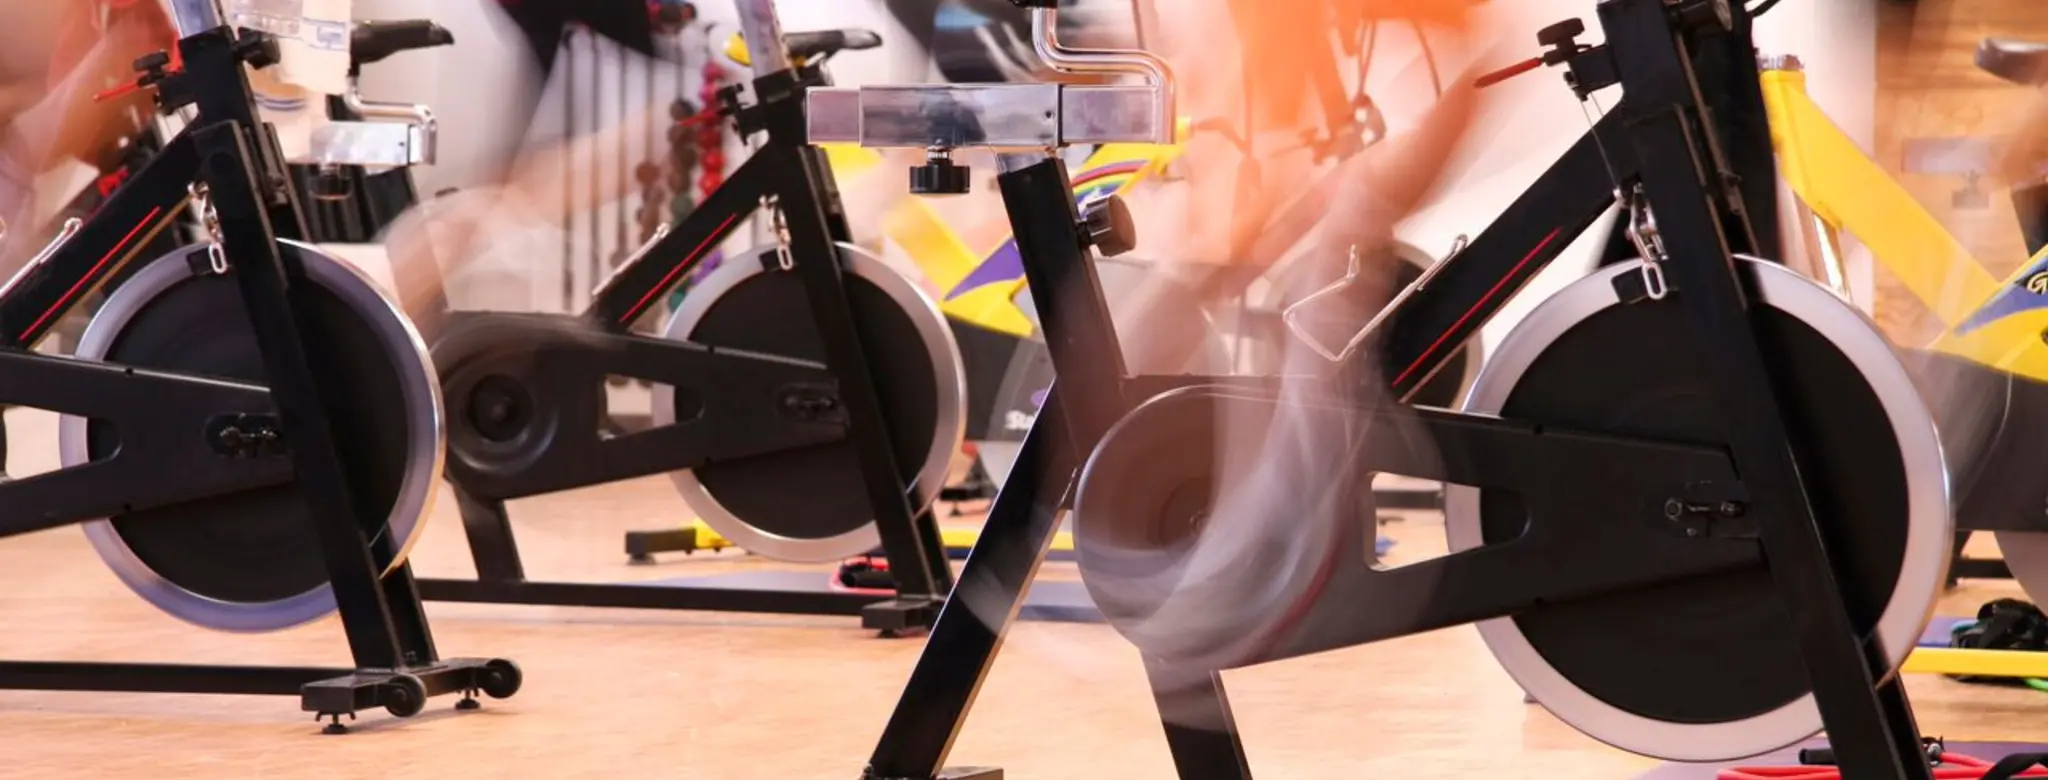 gym studio with bikes